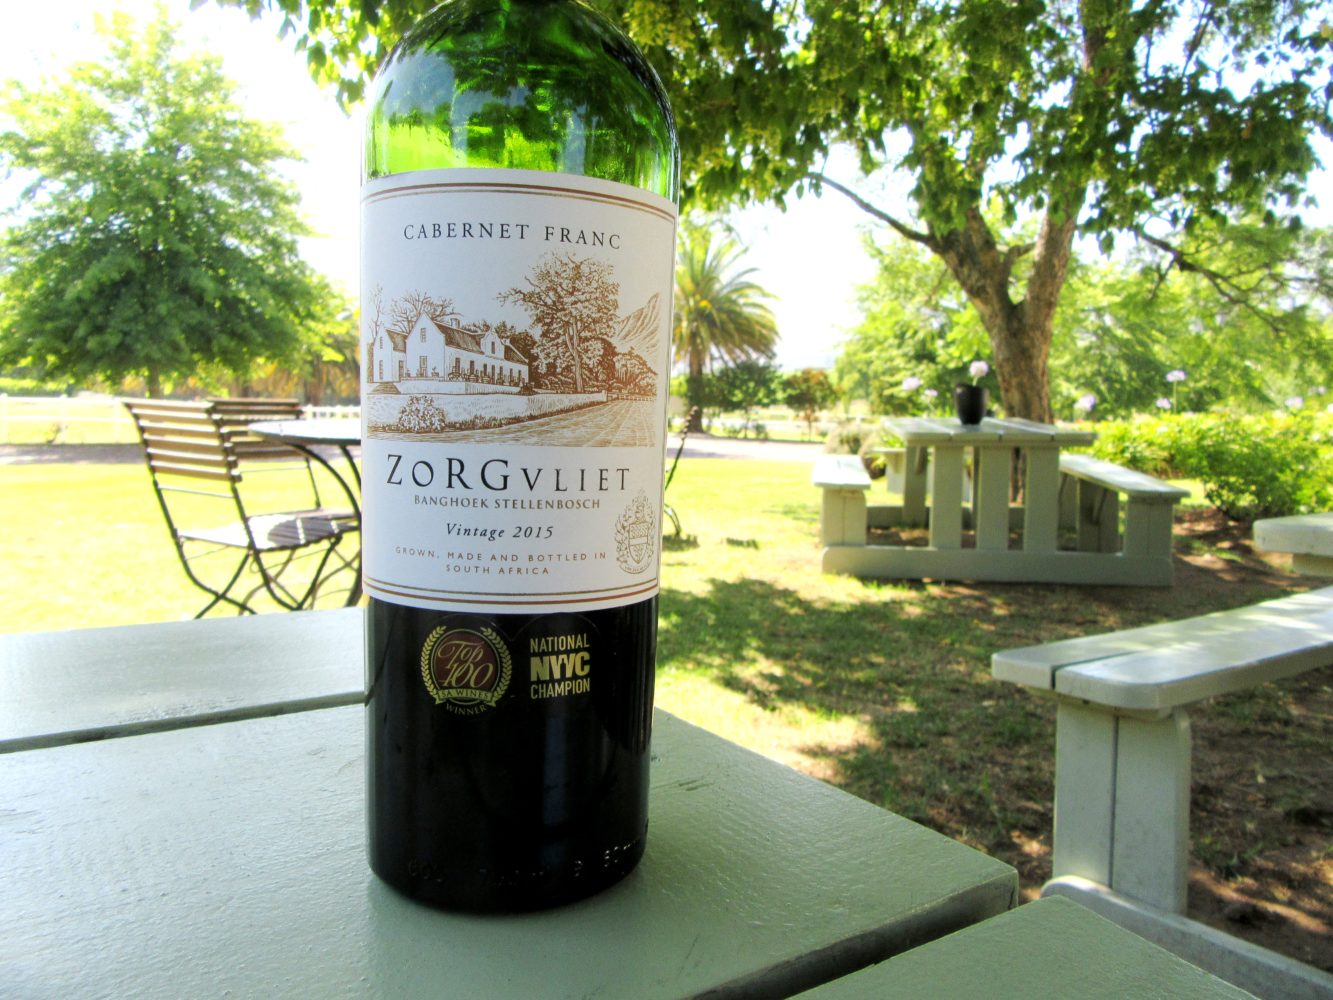 Zorgvliet, Cabernet Franc 2015, Banghoek, South Africa, Wine Casual